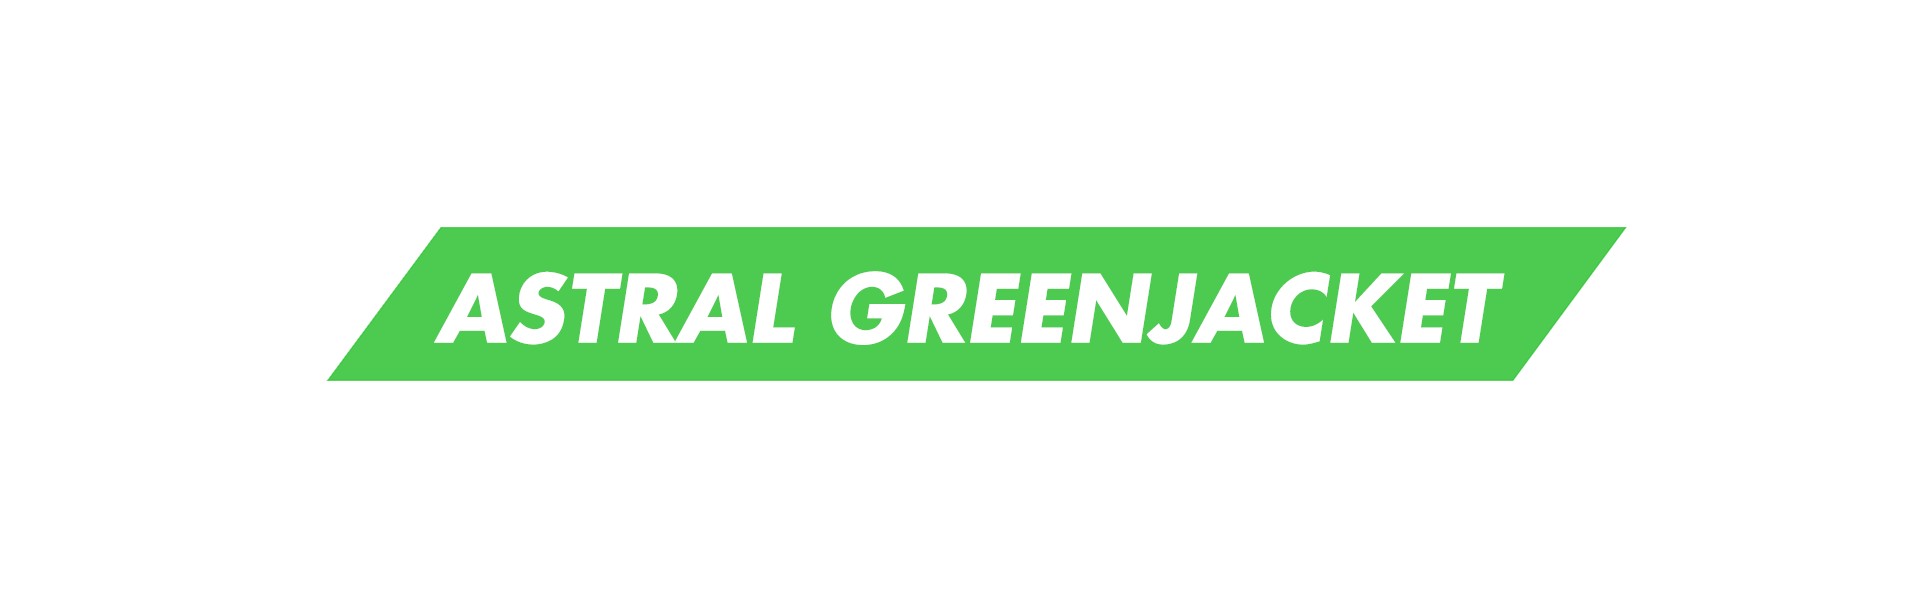 GreenJacket – Astral